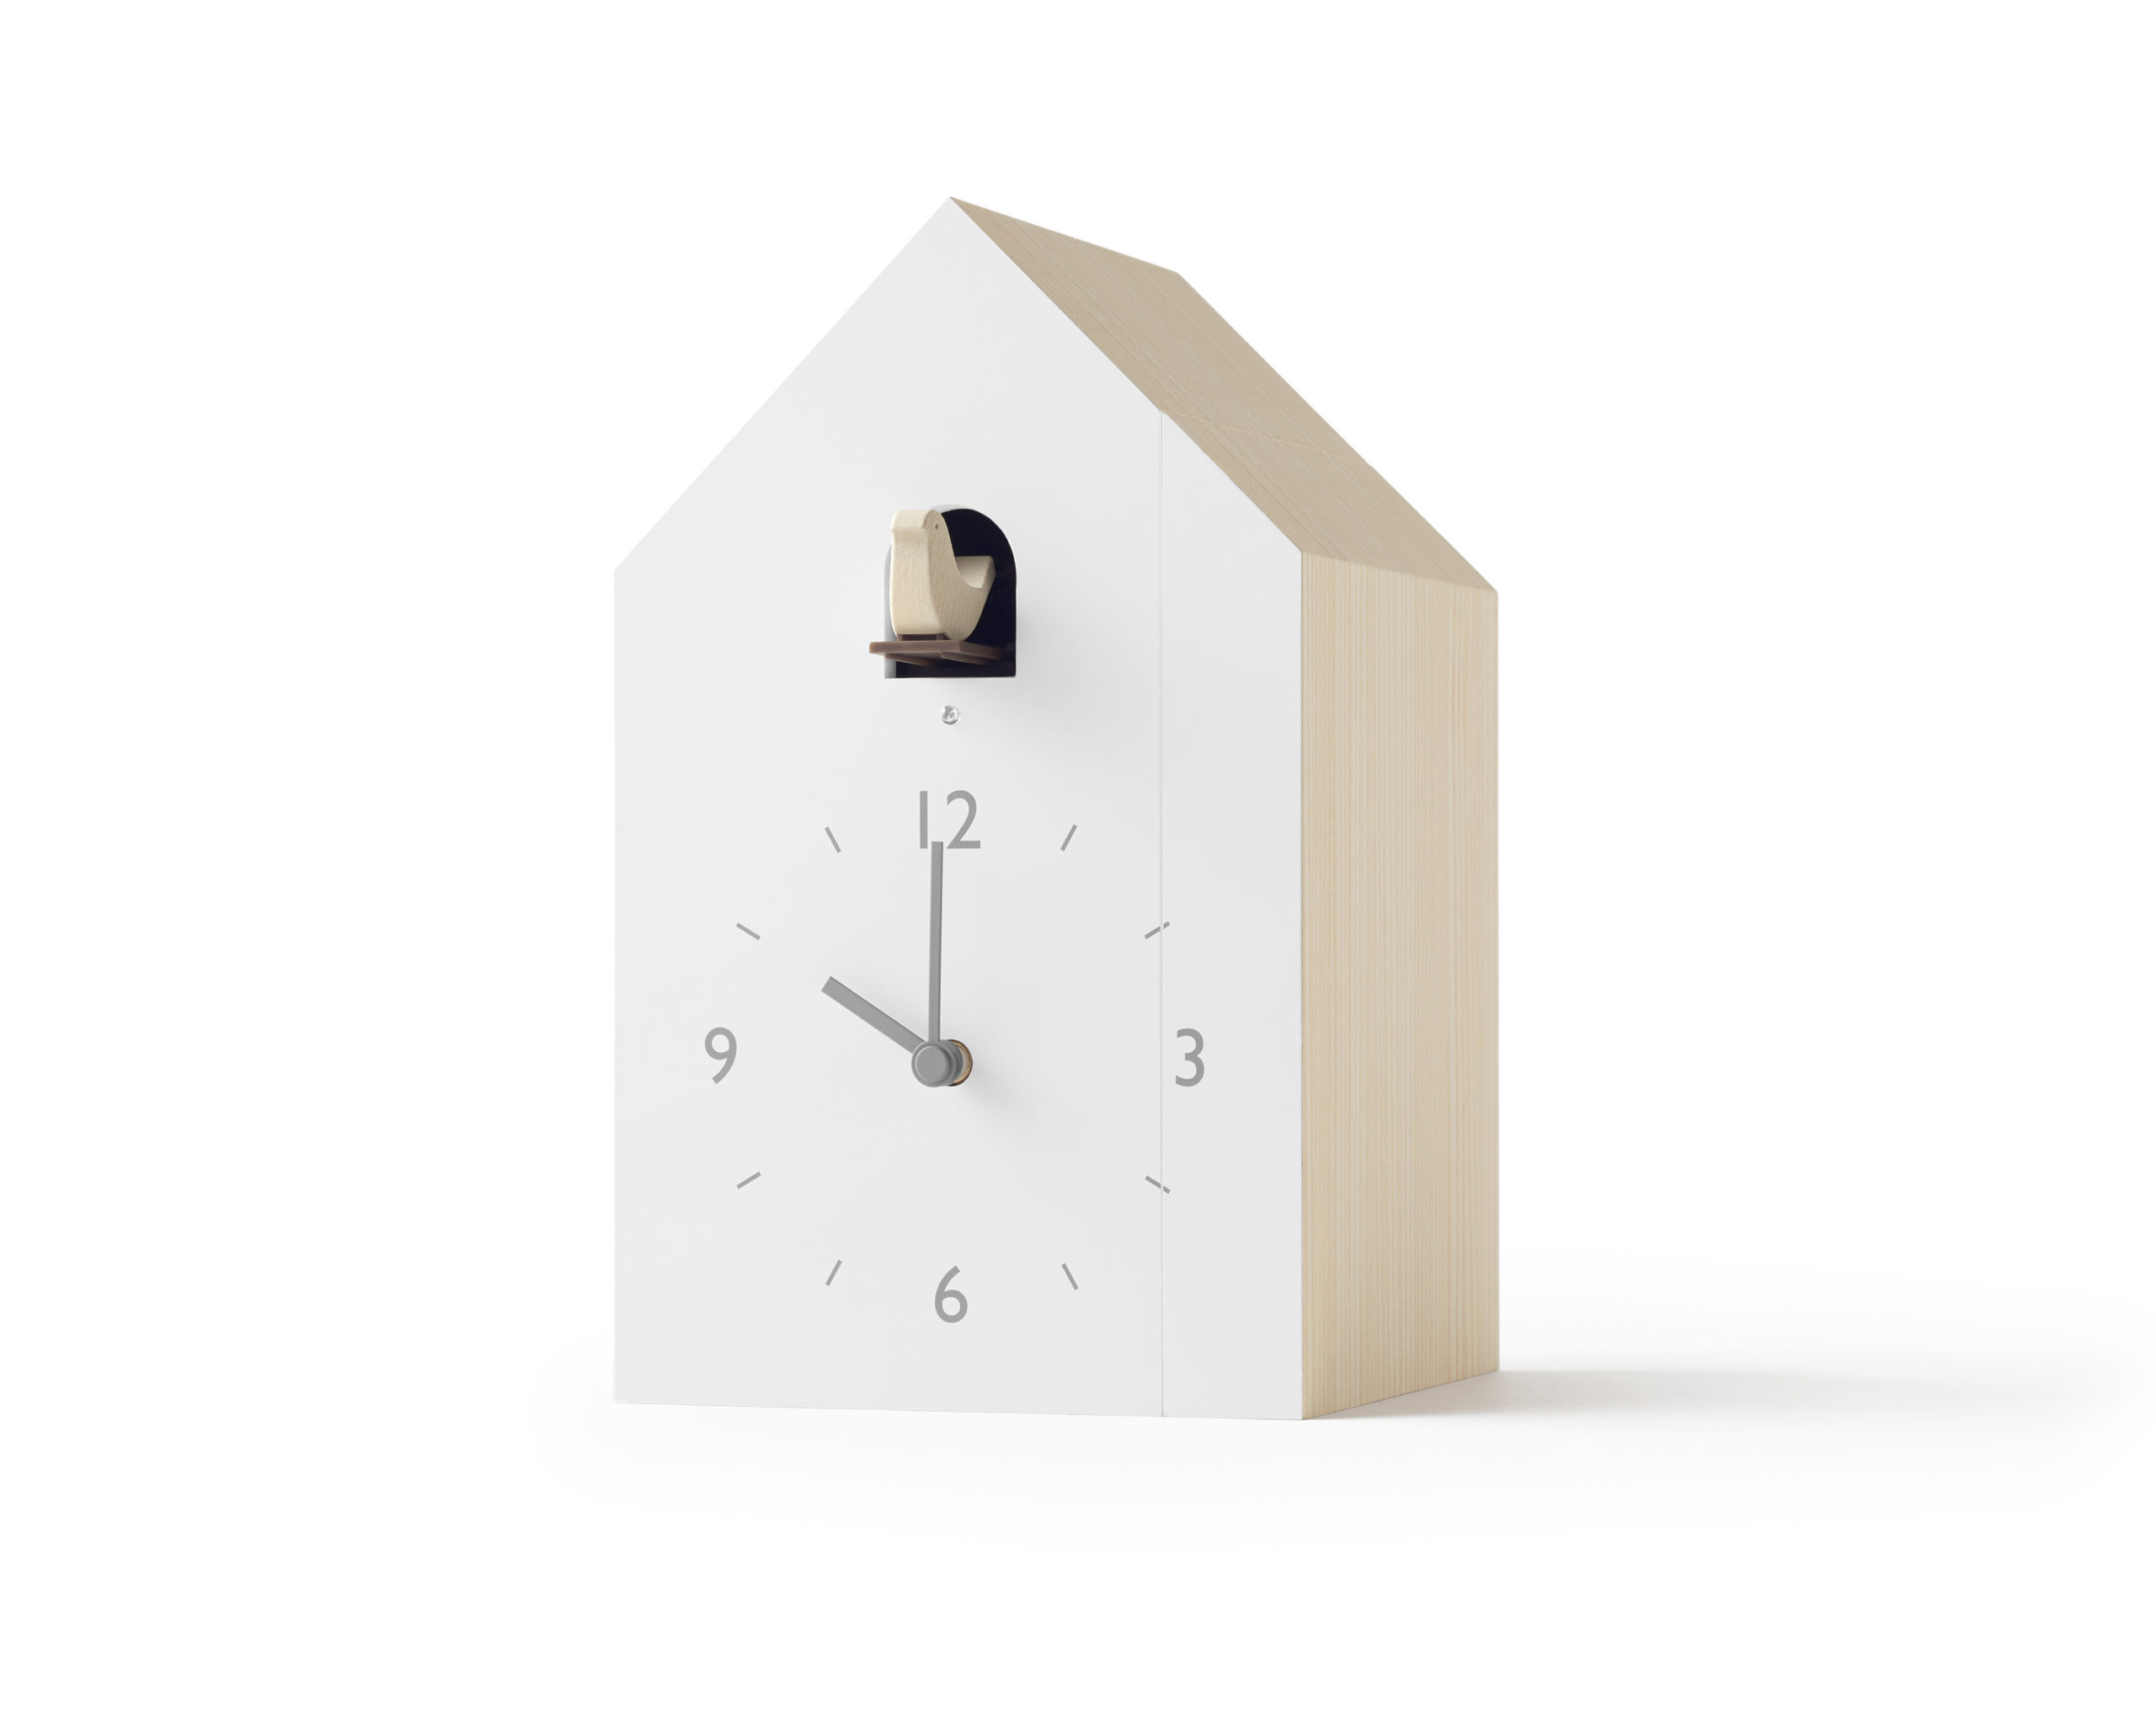 Lemnos Bookend Cuckoo Clock designed by Nendo